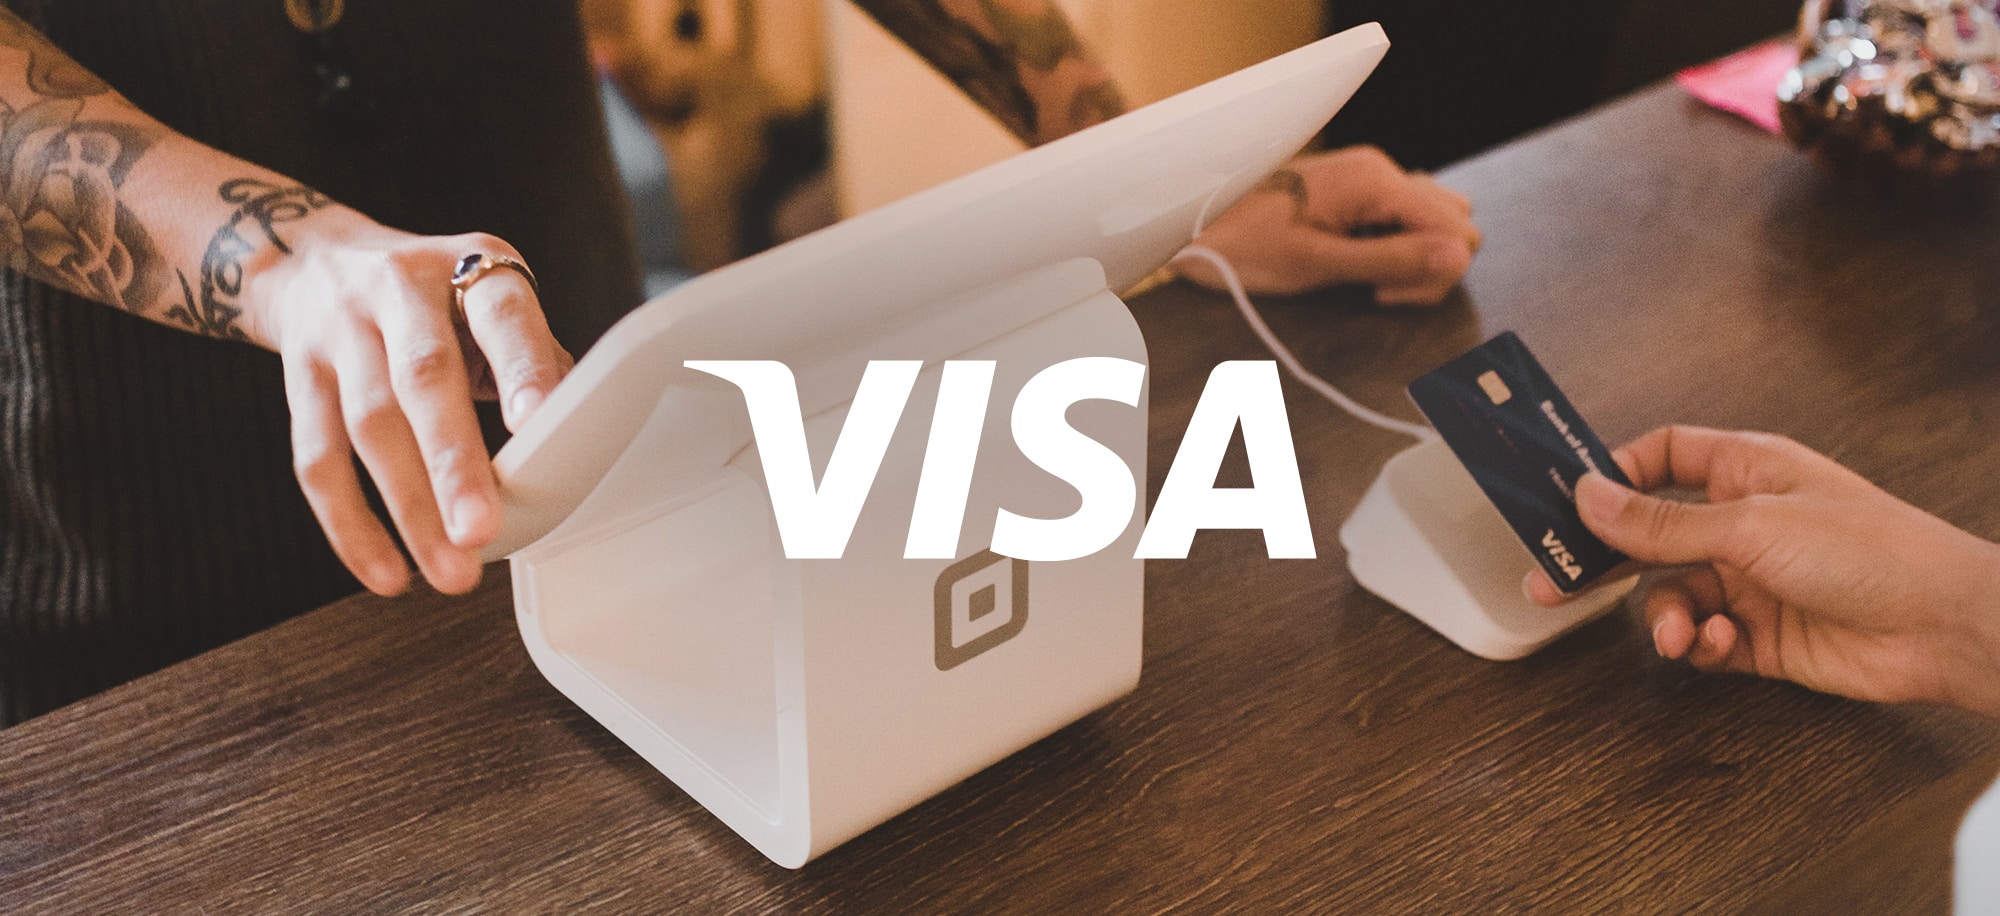 Visa’s global insights transformation